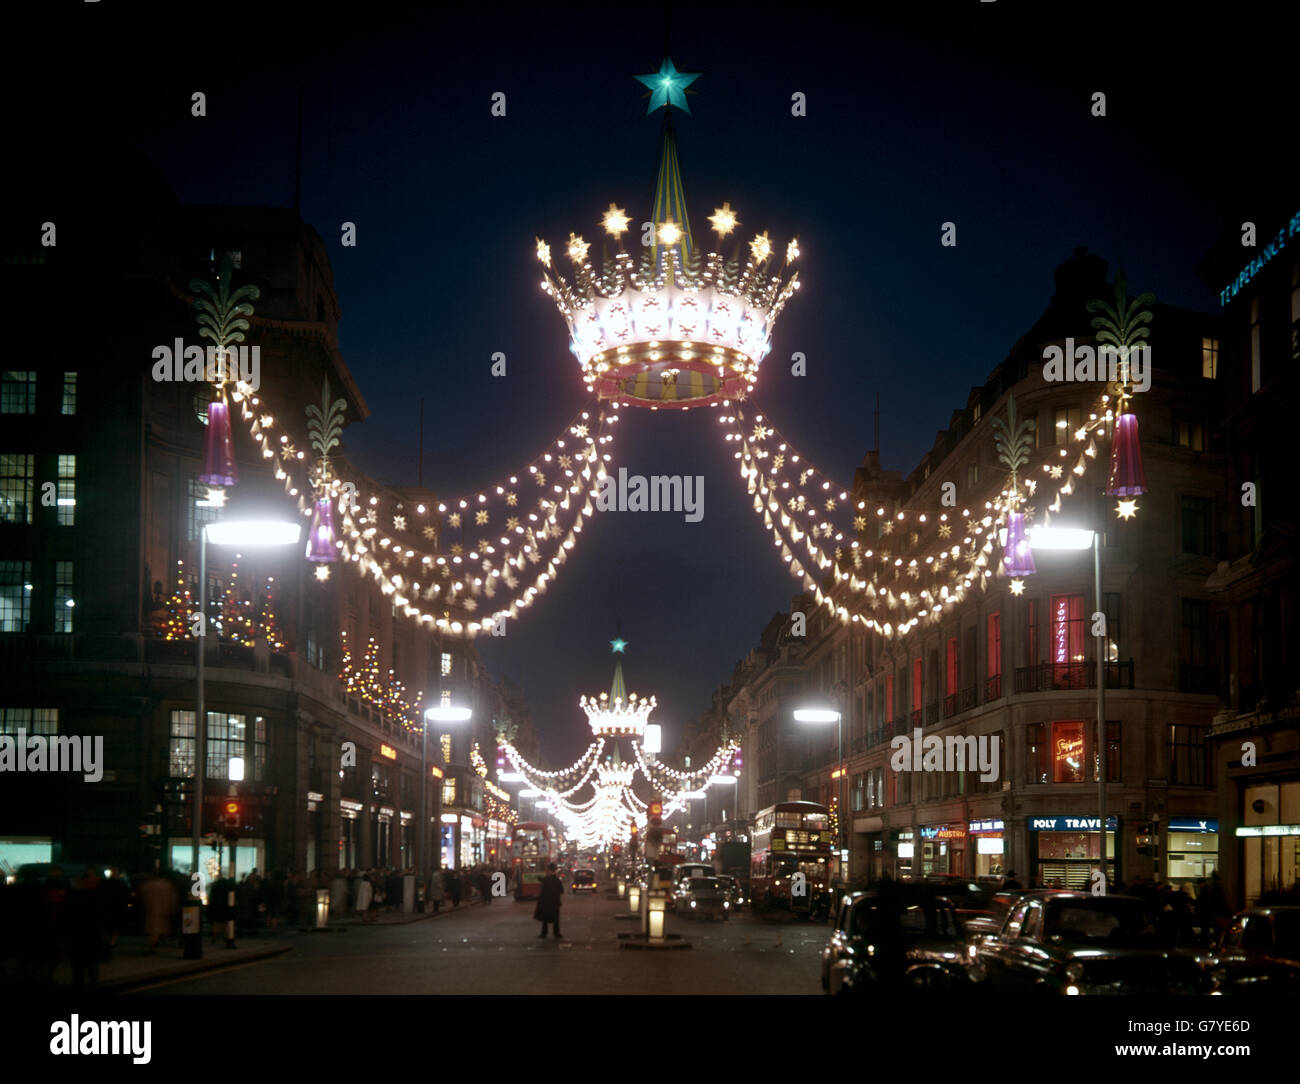 London Scenes - Regents street Christmas Lights. Christmas lights in Regents street, London. Stock Photo